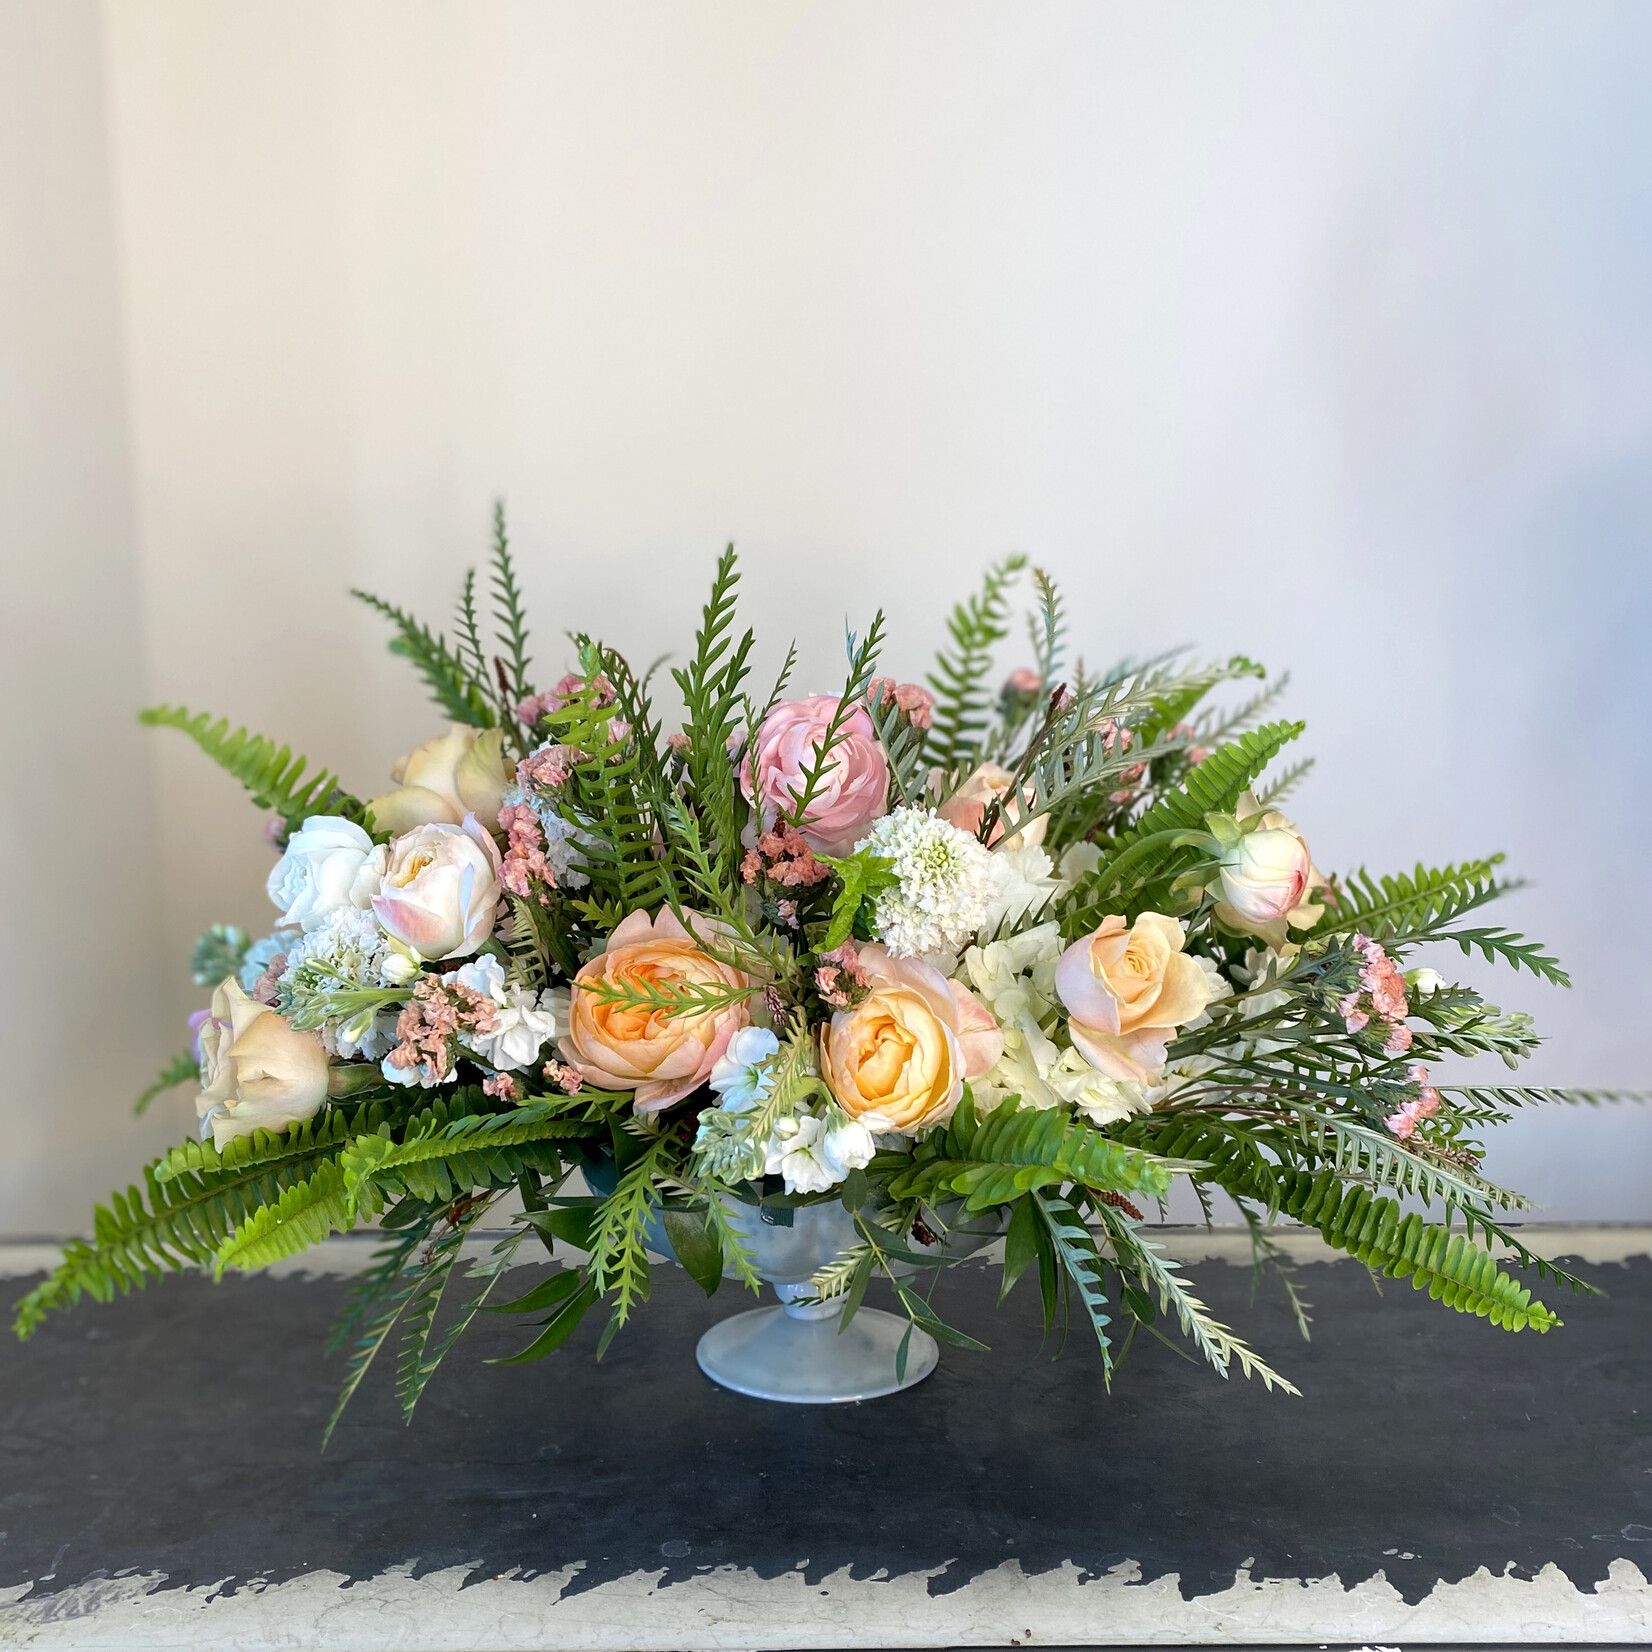 Luxe Sized Flower Arrangement – Designer Select: $200 - $250